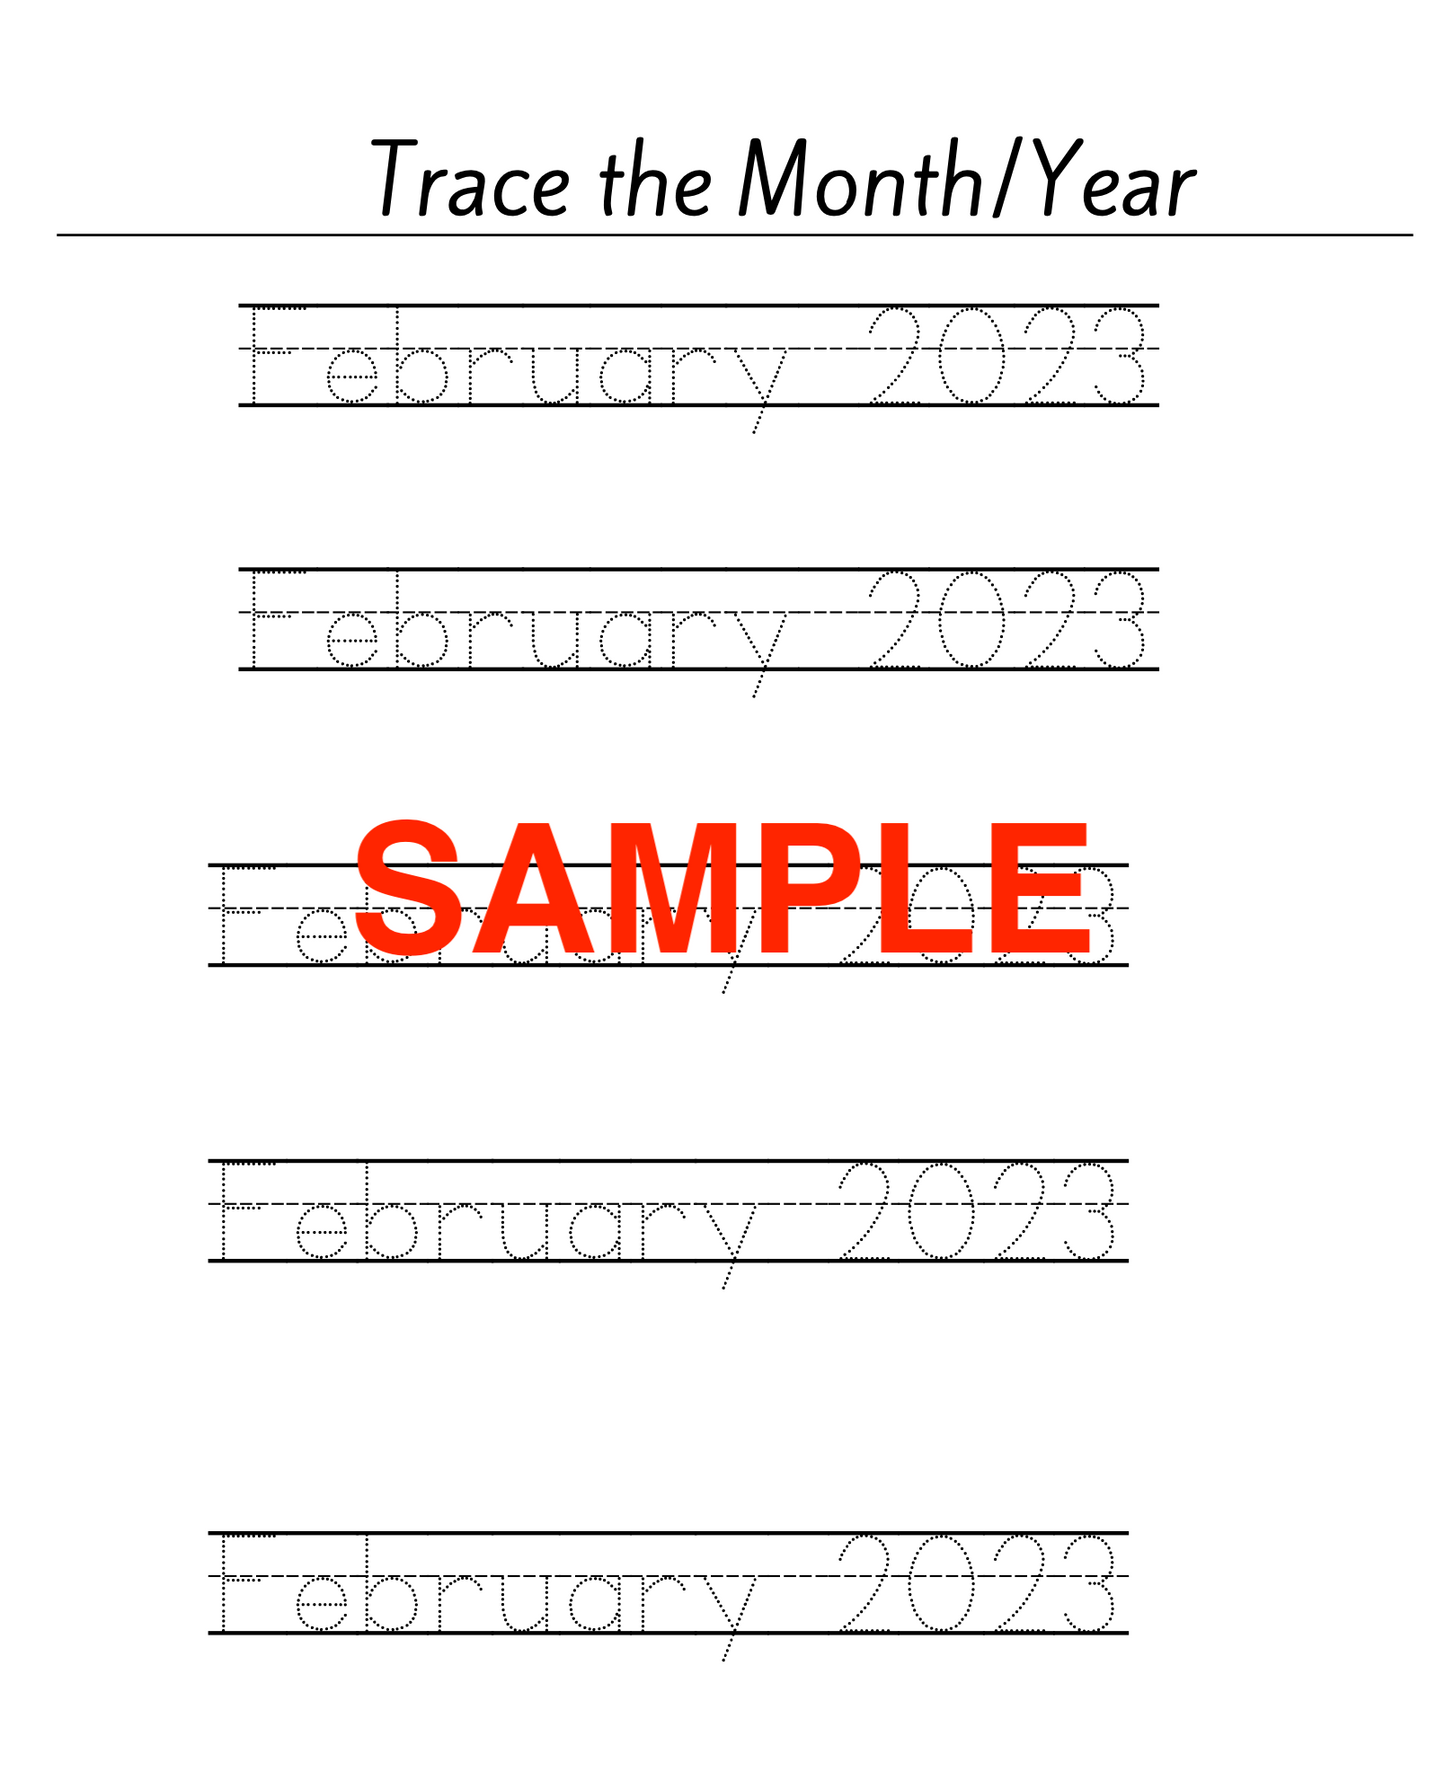 February Calendar Date Tracing Workbook